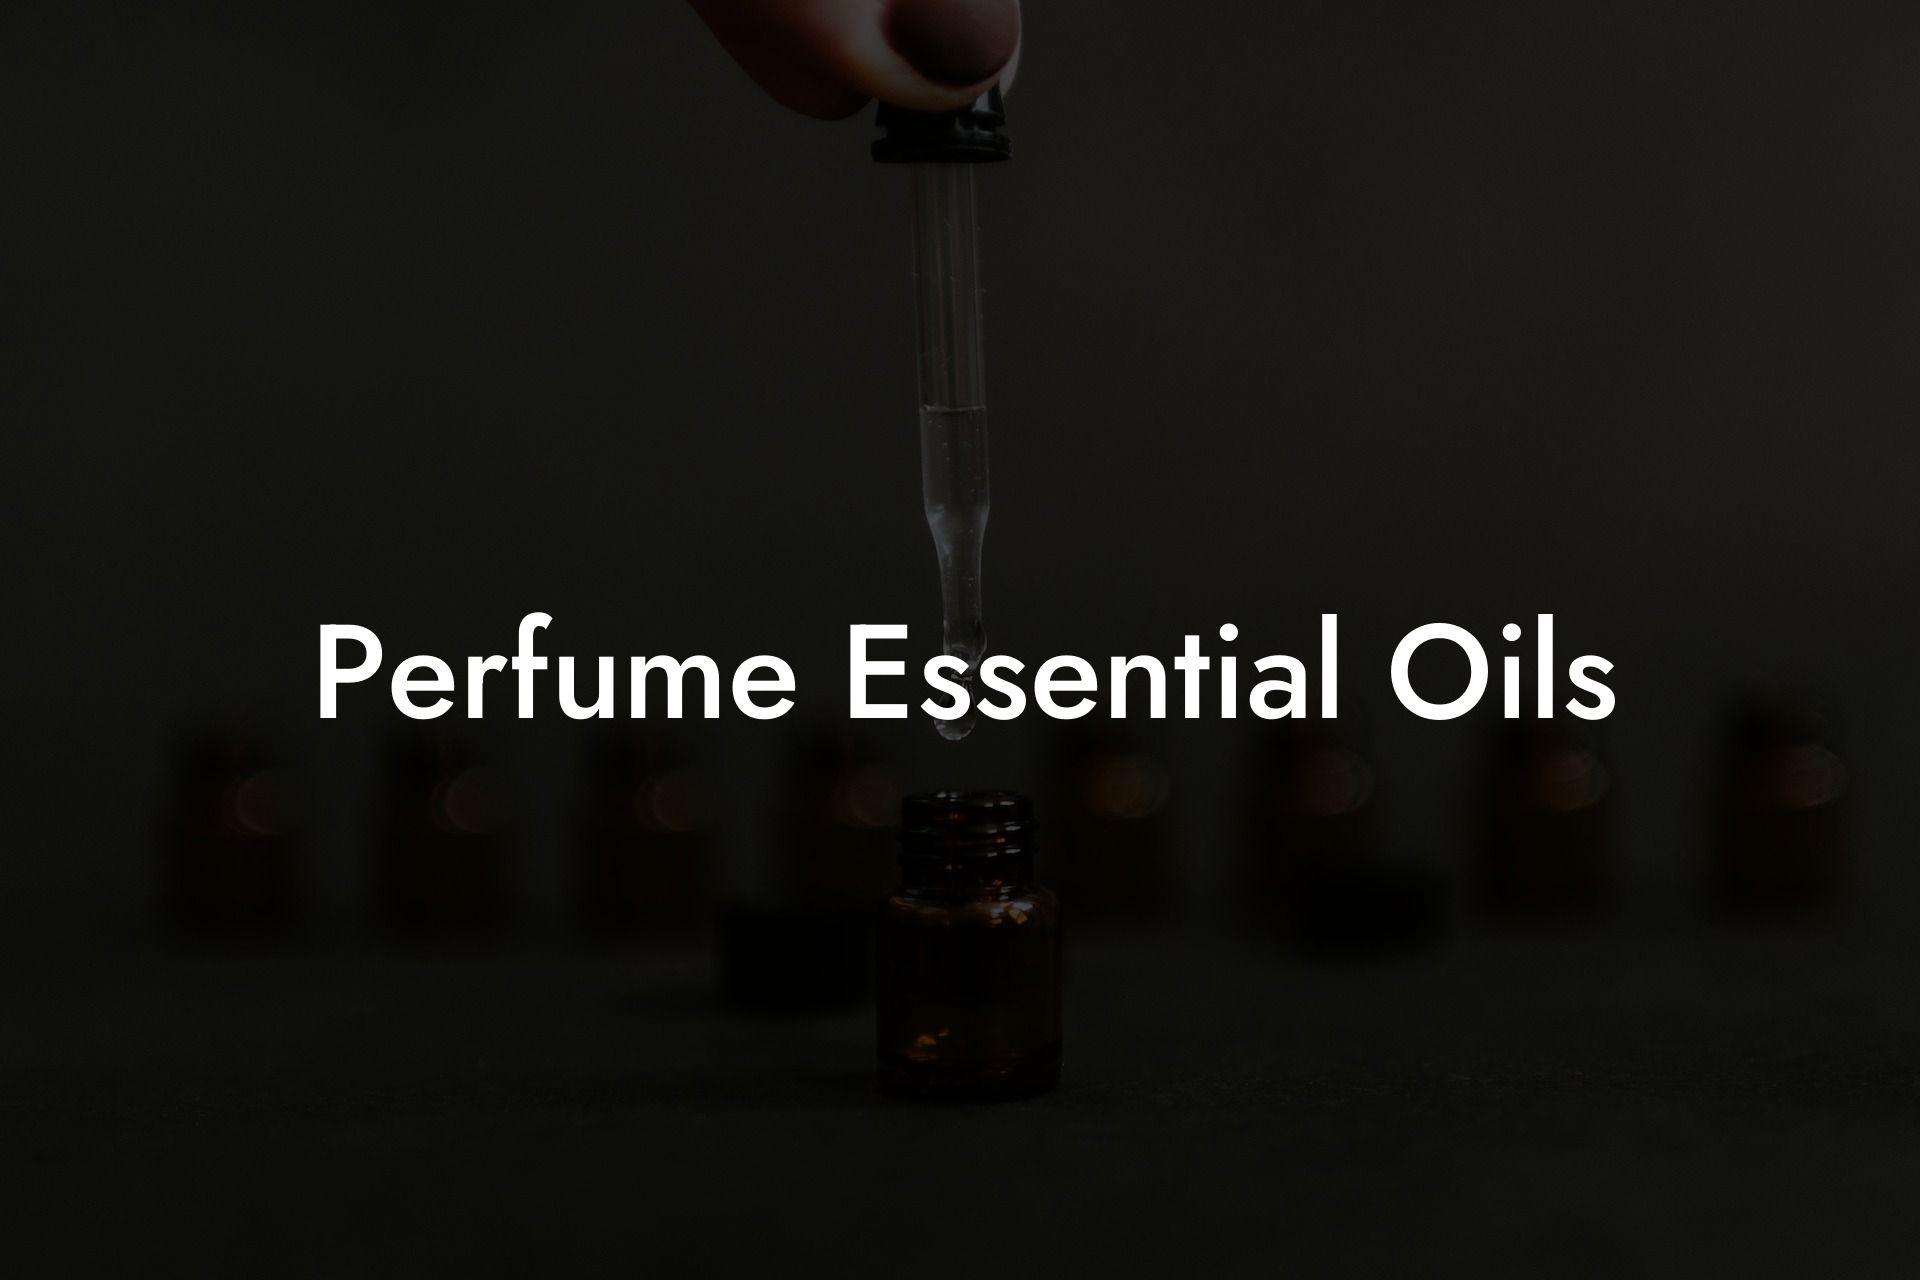 Perfume Essential Oils